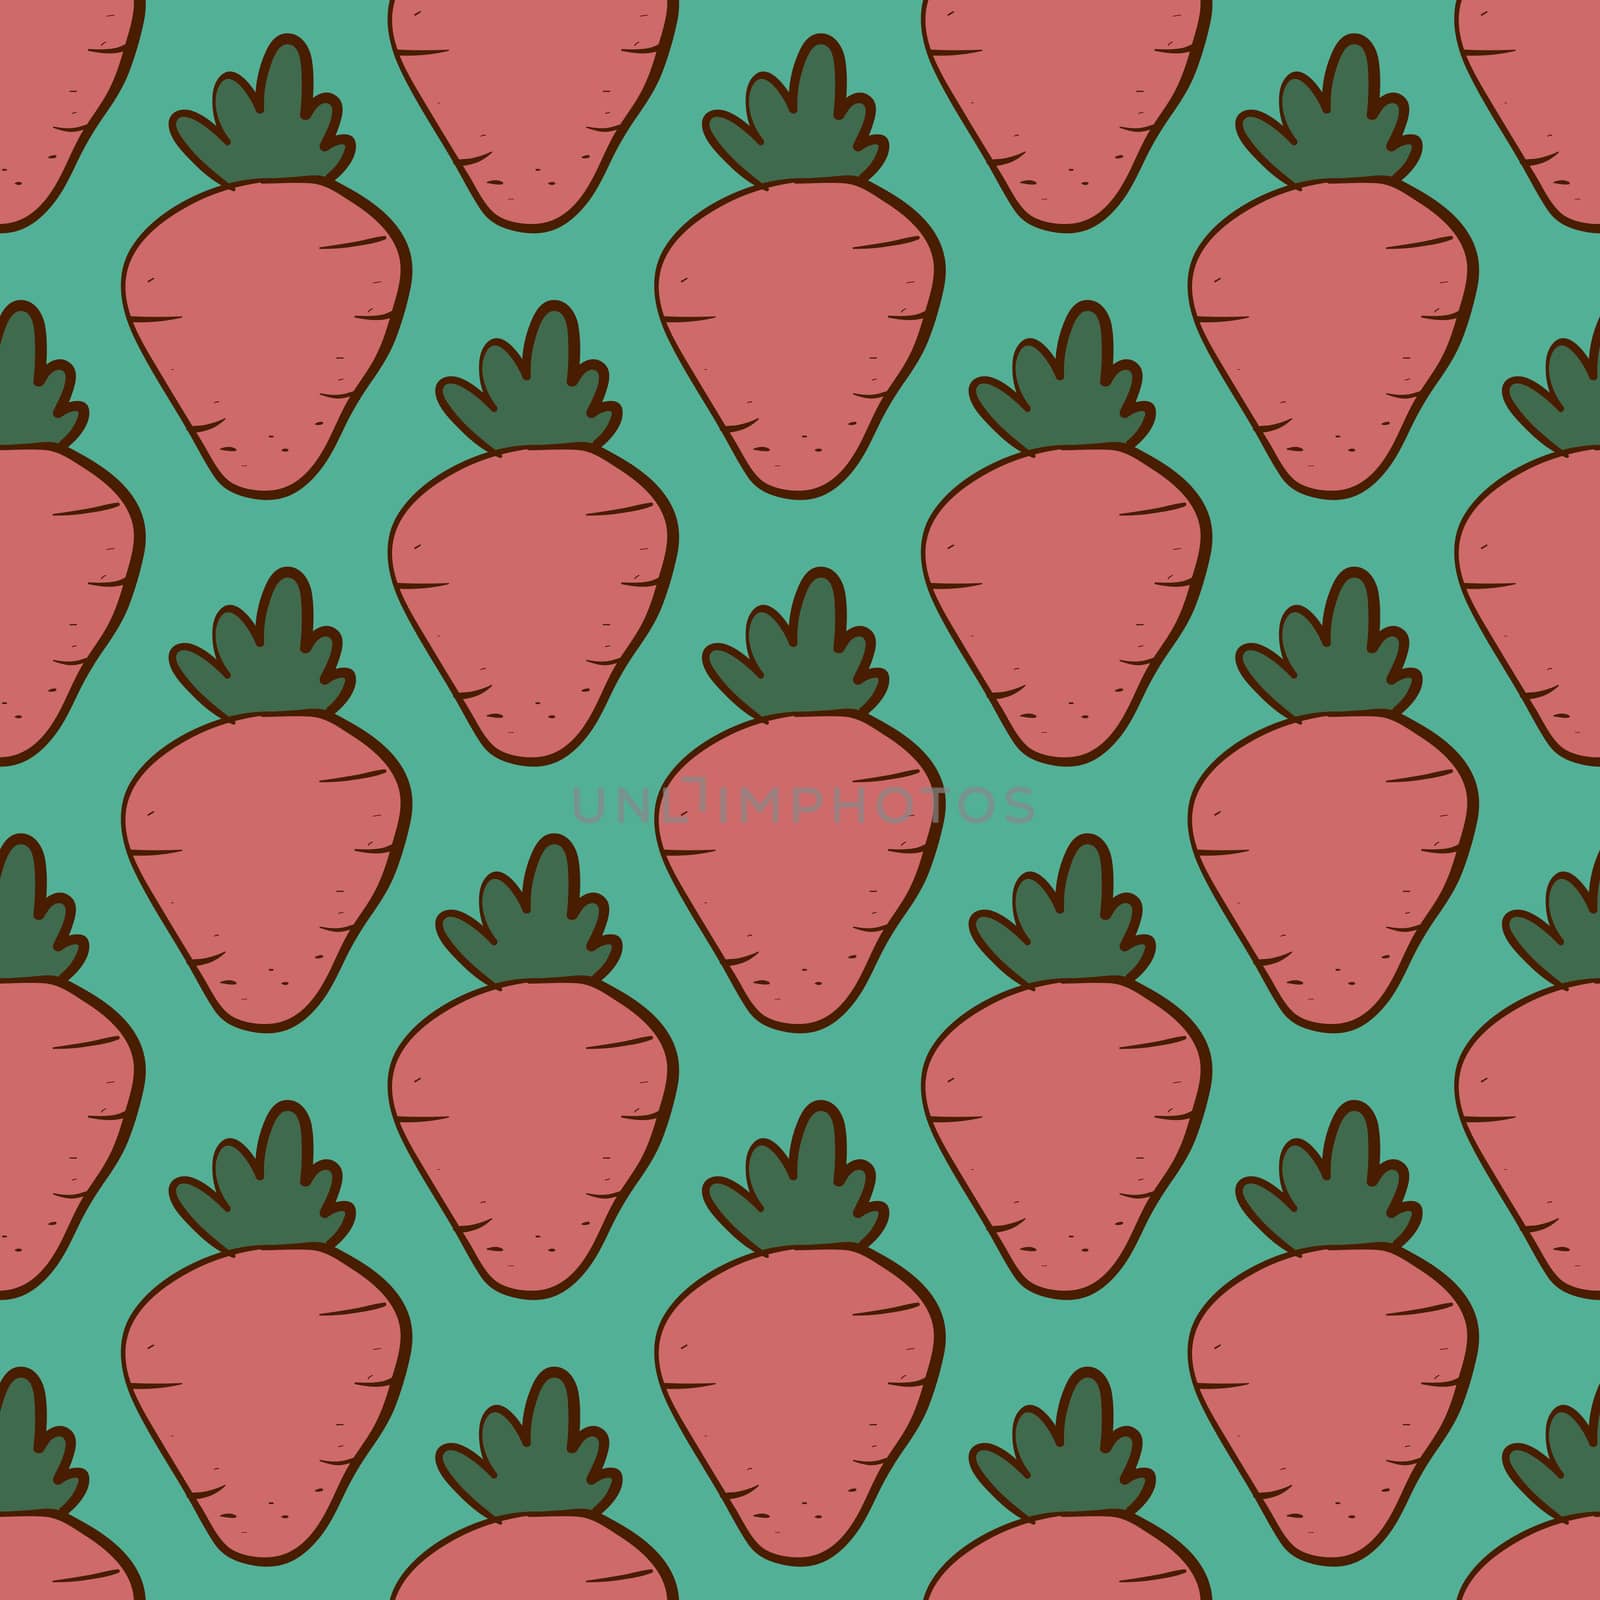 Carrot pattern , illustration, vector on white background